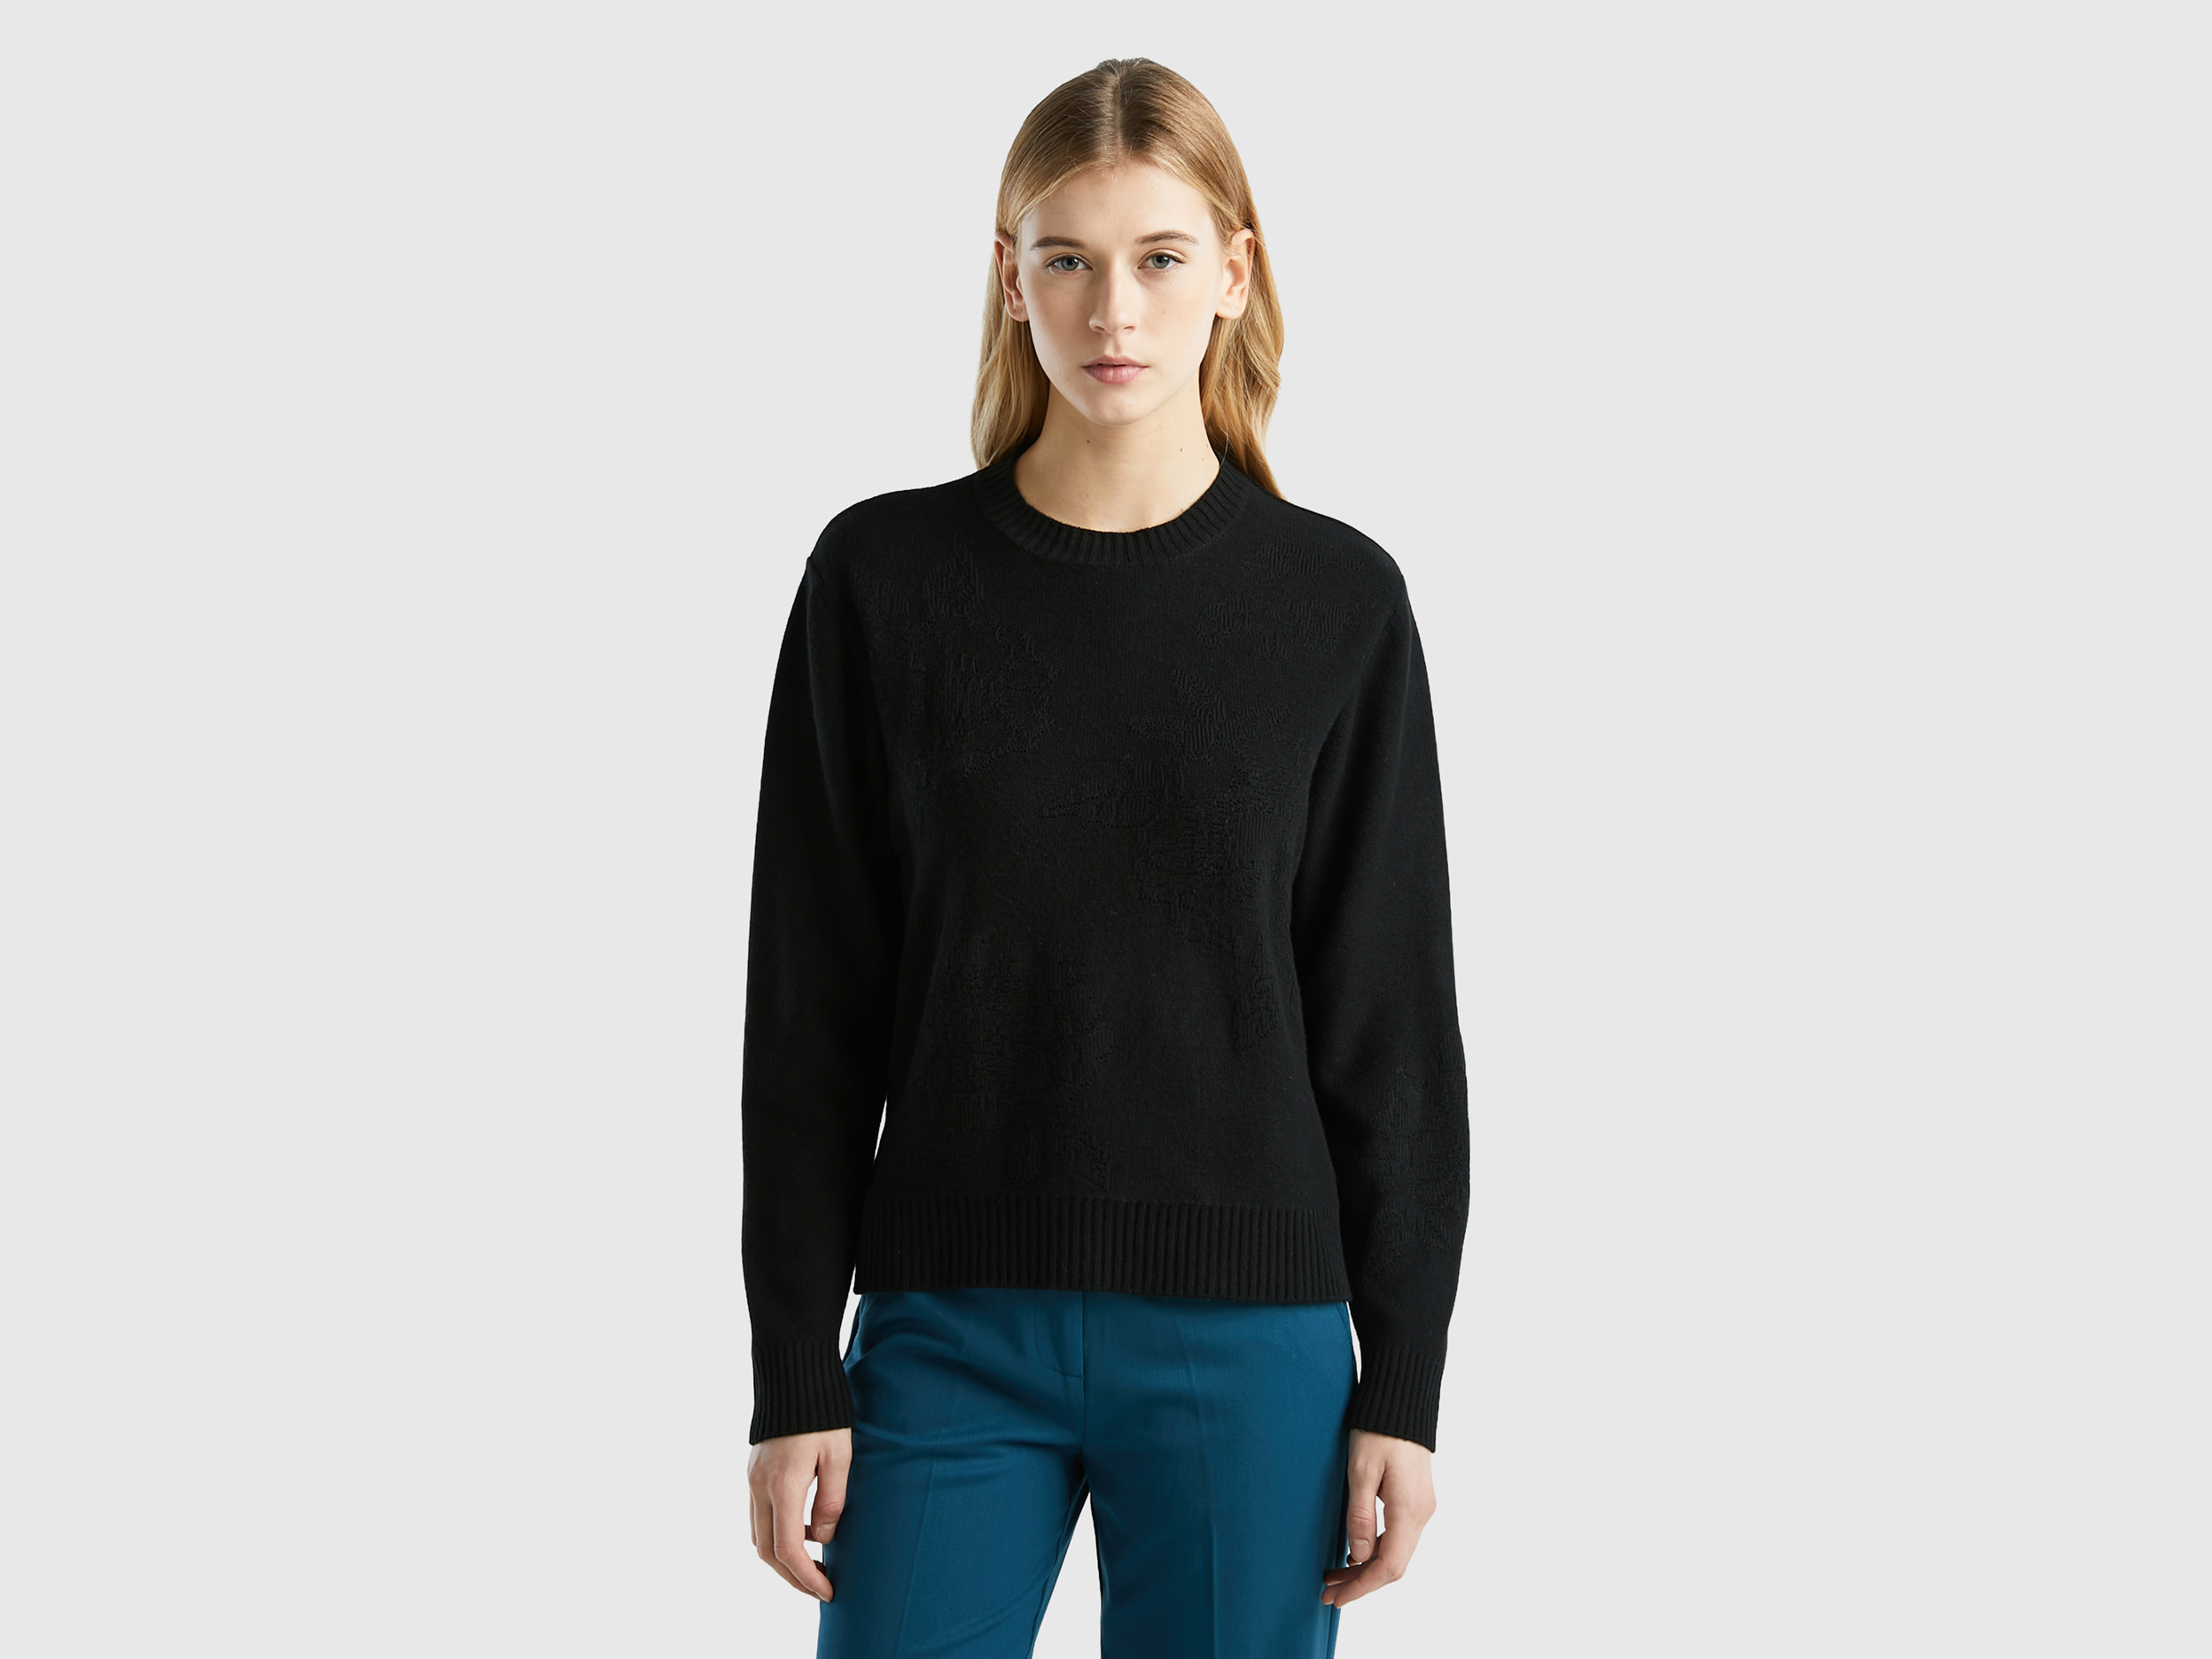 Benetton, Cashmere Blend Sweater With Floral Designs, size L, Black, Women